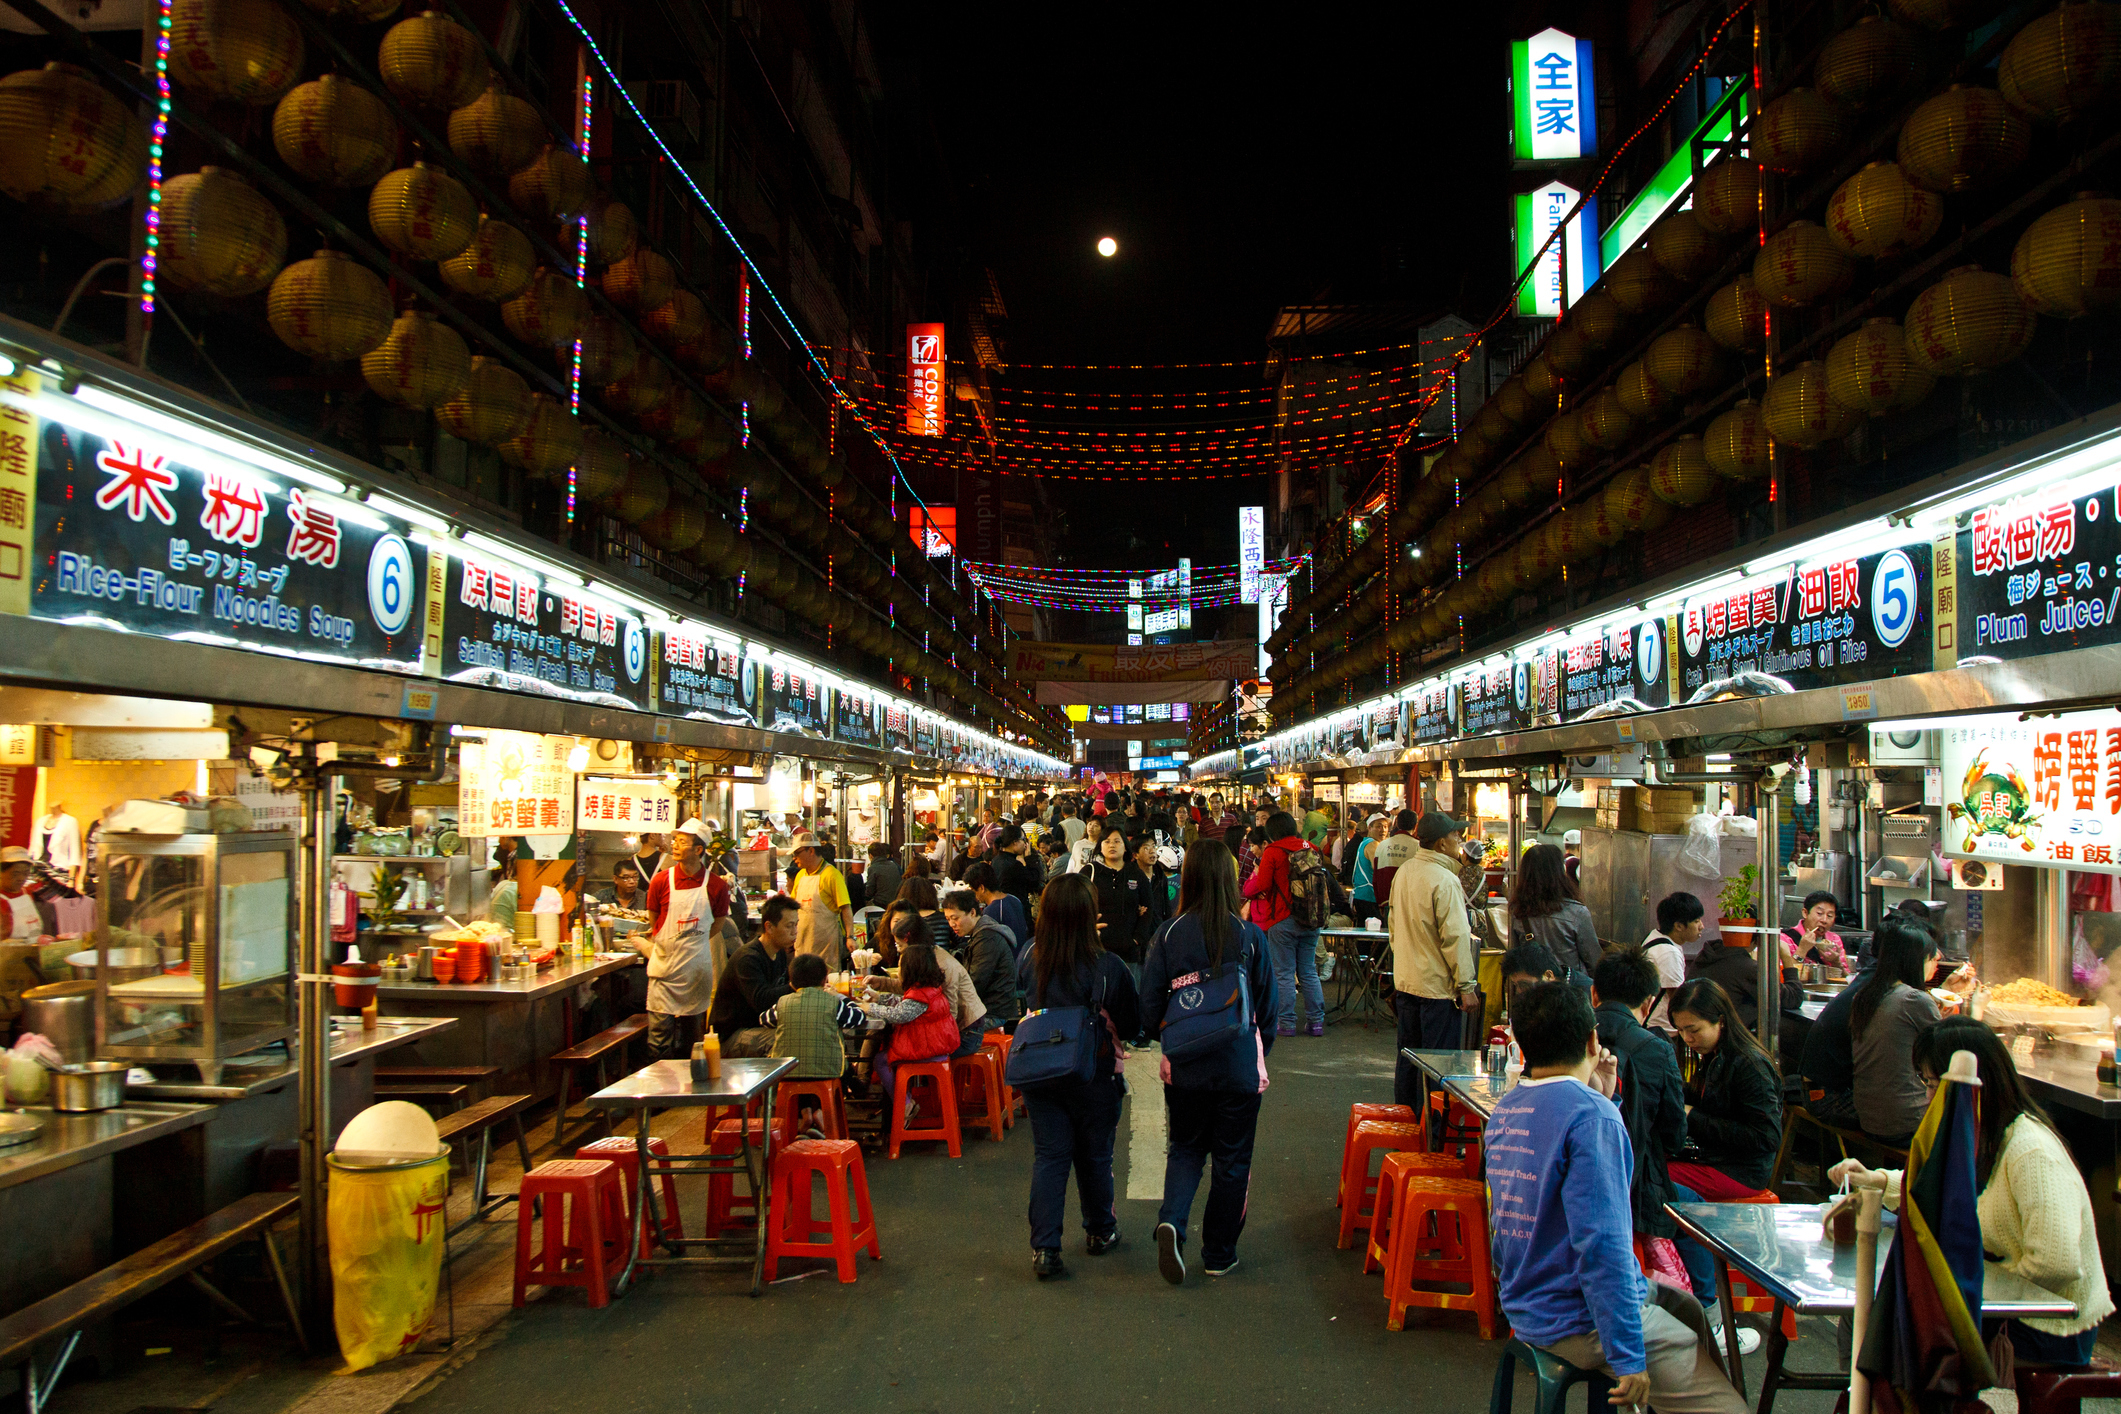 Keelung Miaokou nightmarket in Taiwan